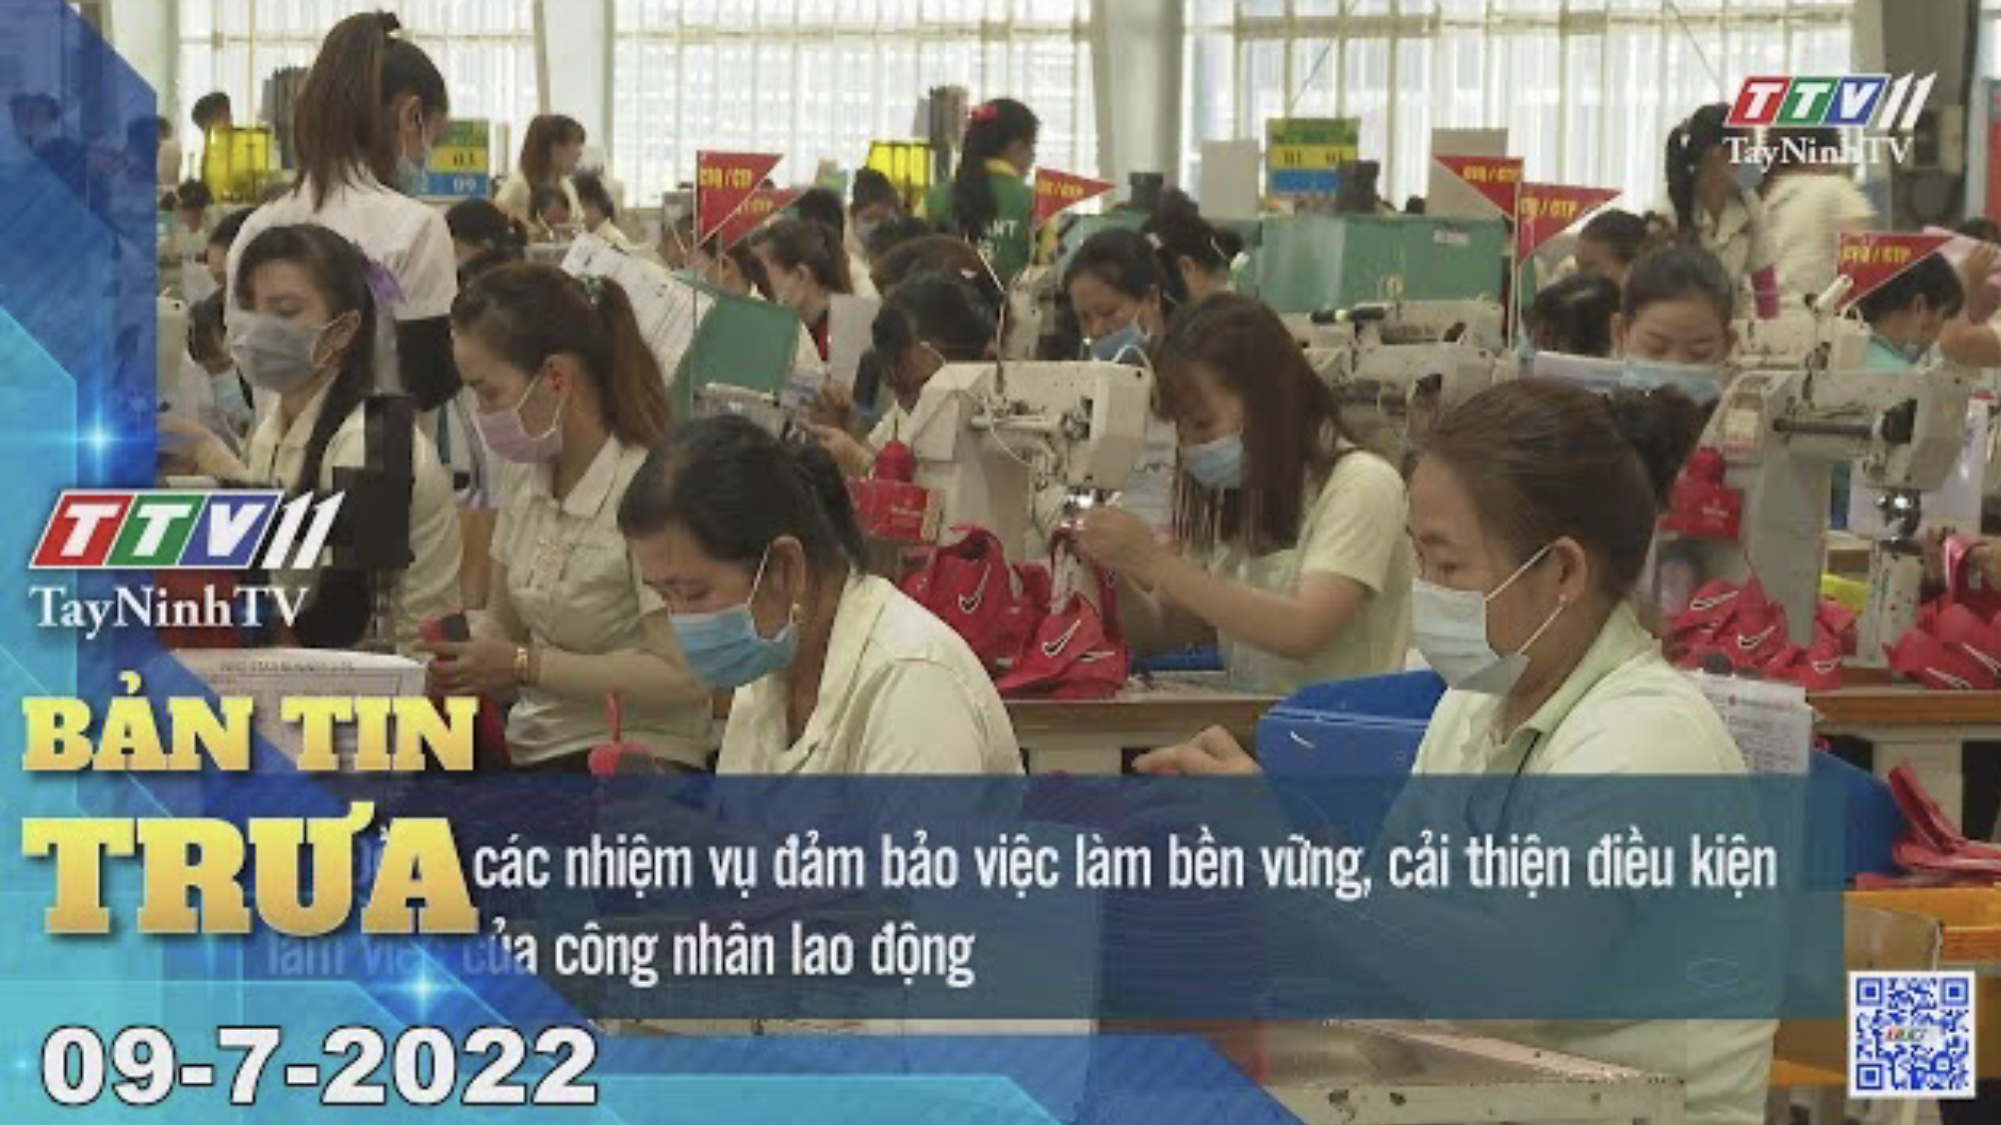 Bản tin trưa 09-7-2022 | Tin tức hôm nay | TayNinhTV